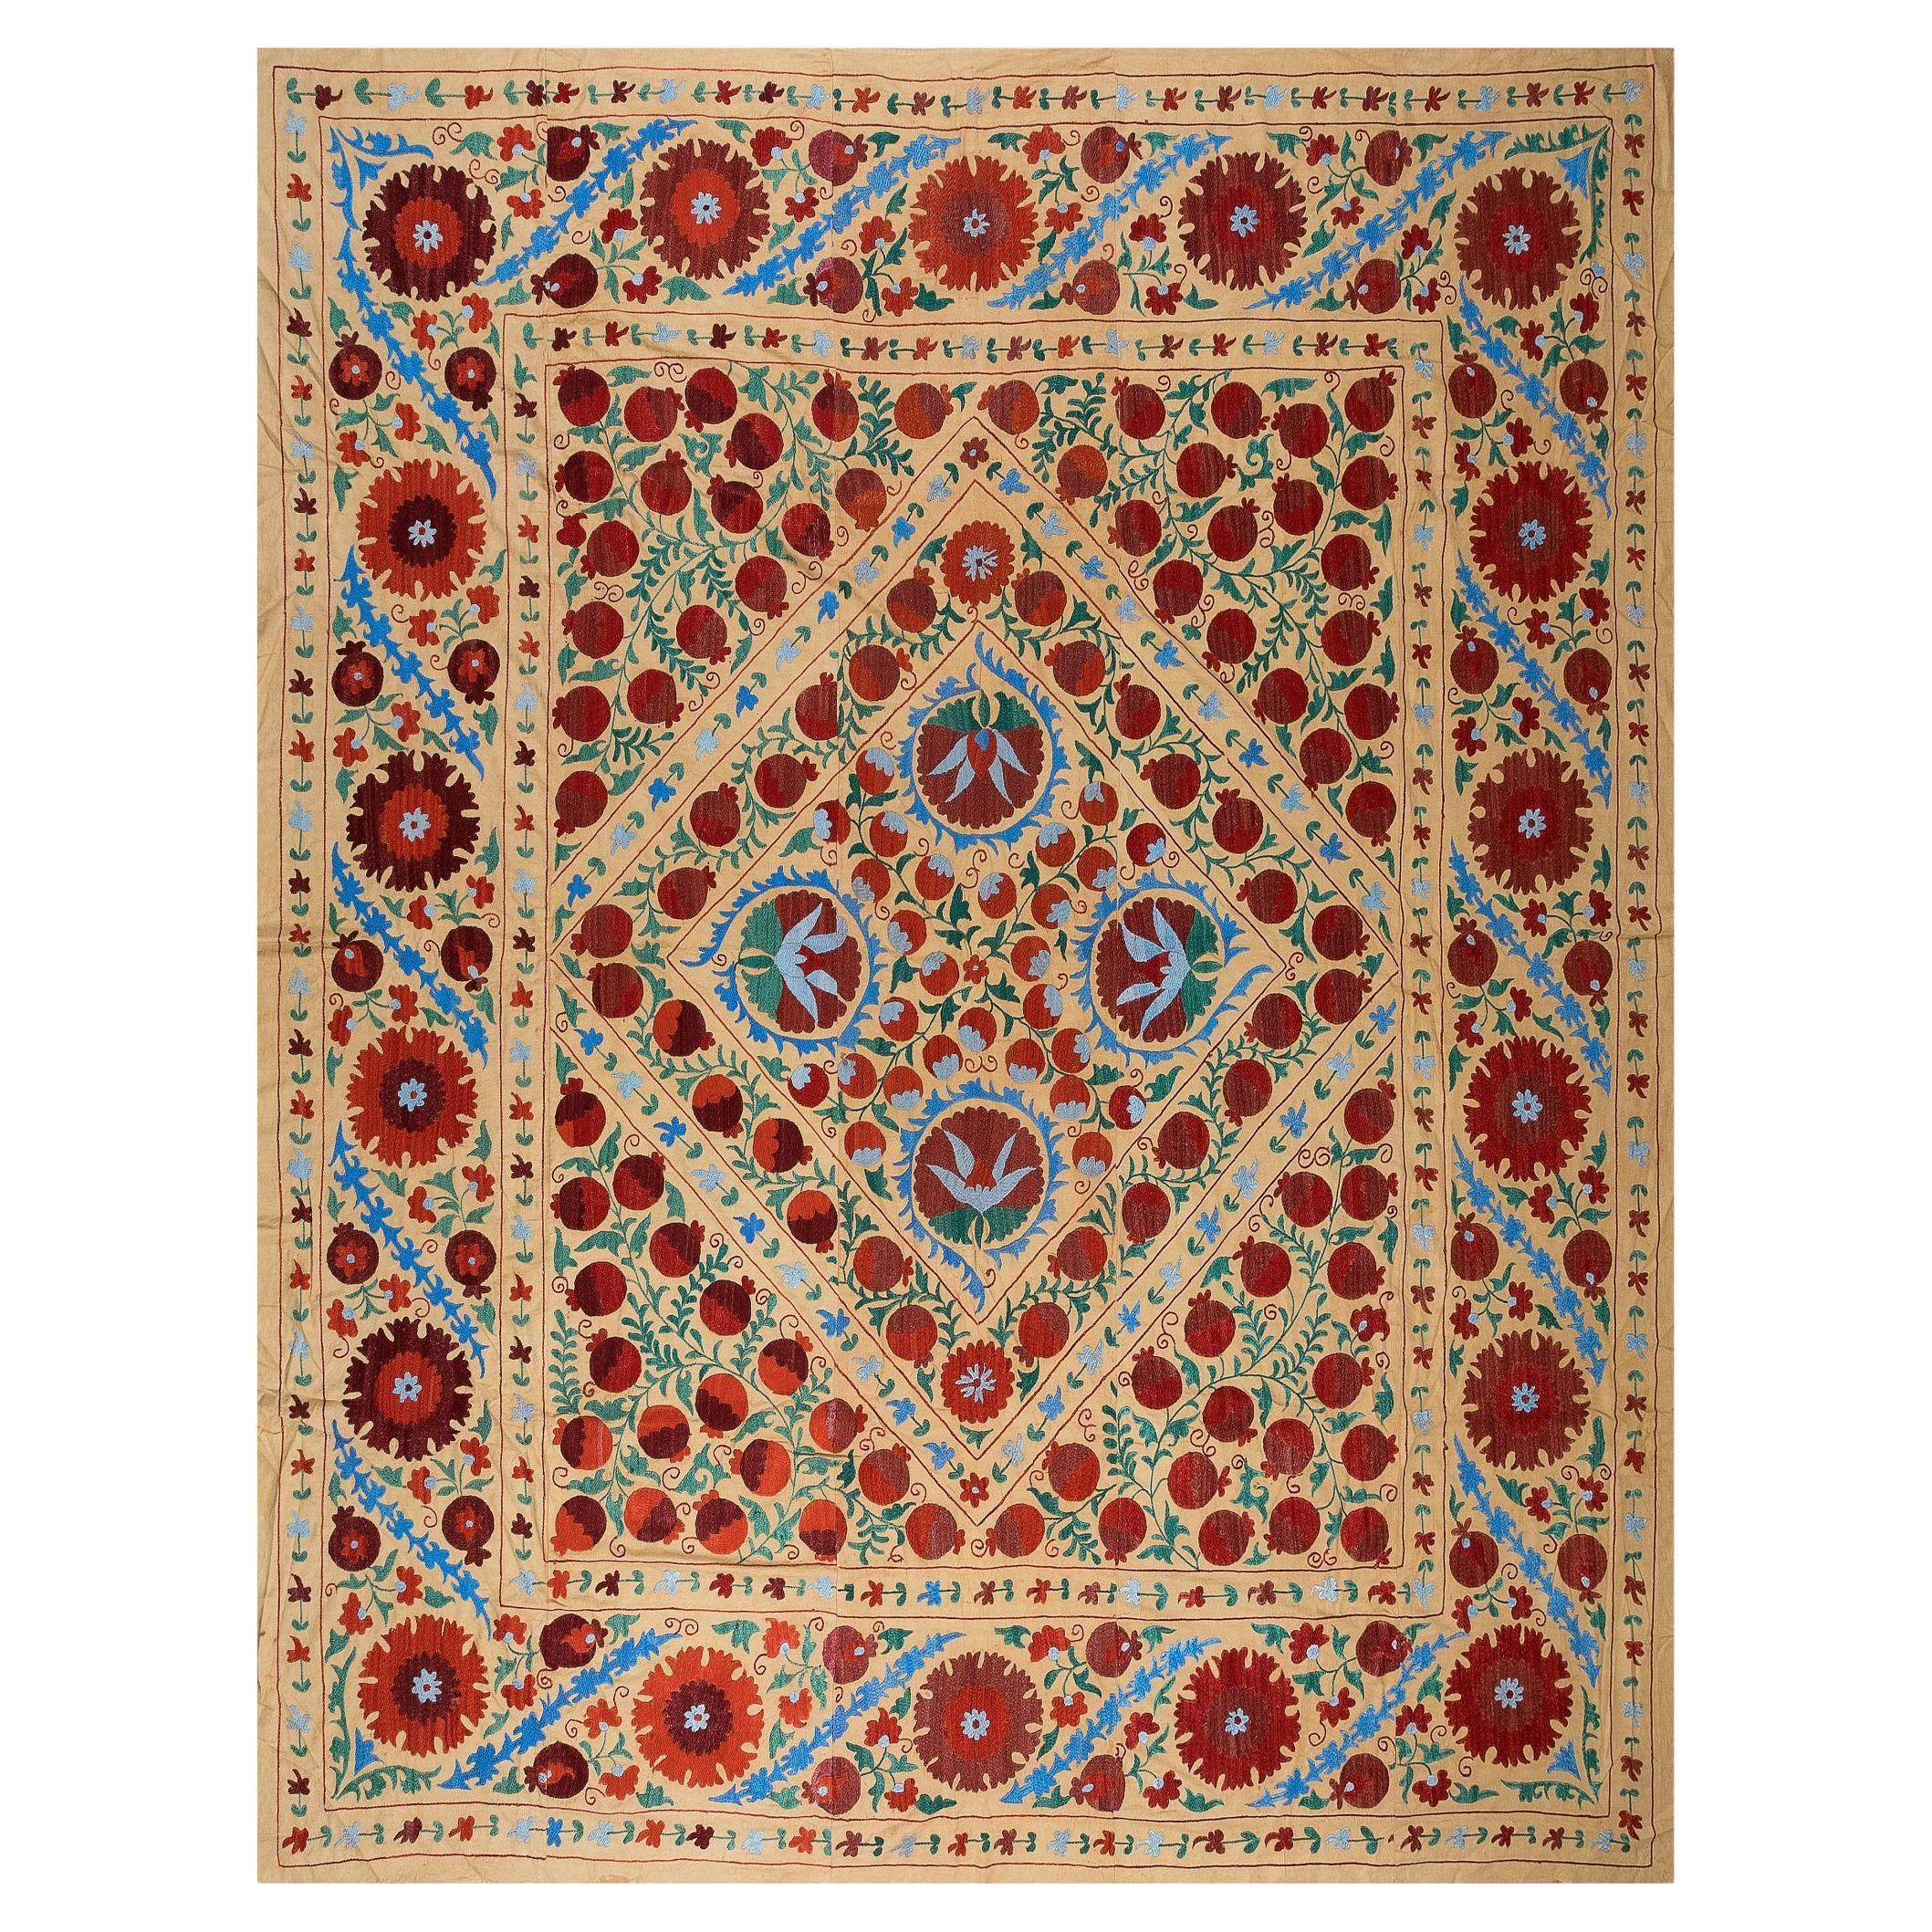 7.9x8.4 Ft Suzani Silk Embroidery Bed Cover, Home Decor Vintage Uzbek Throw